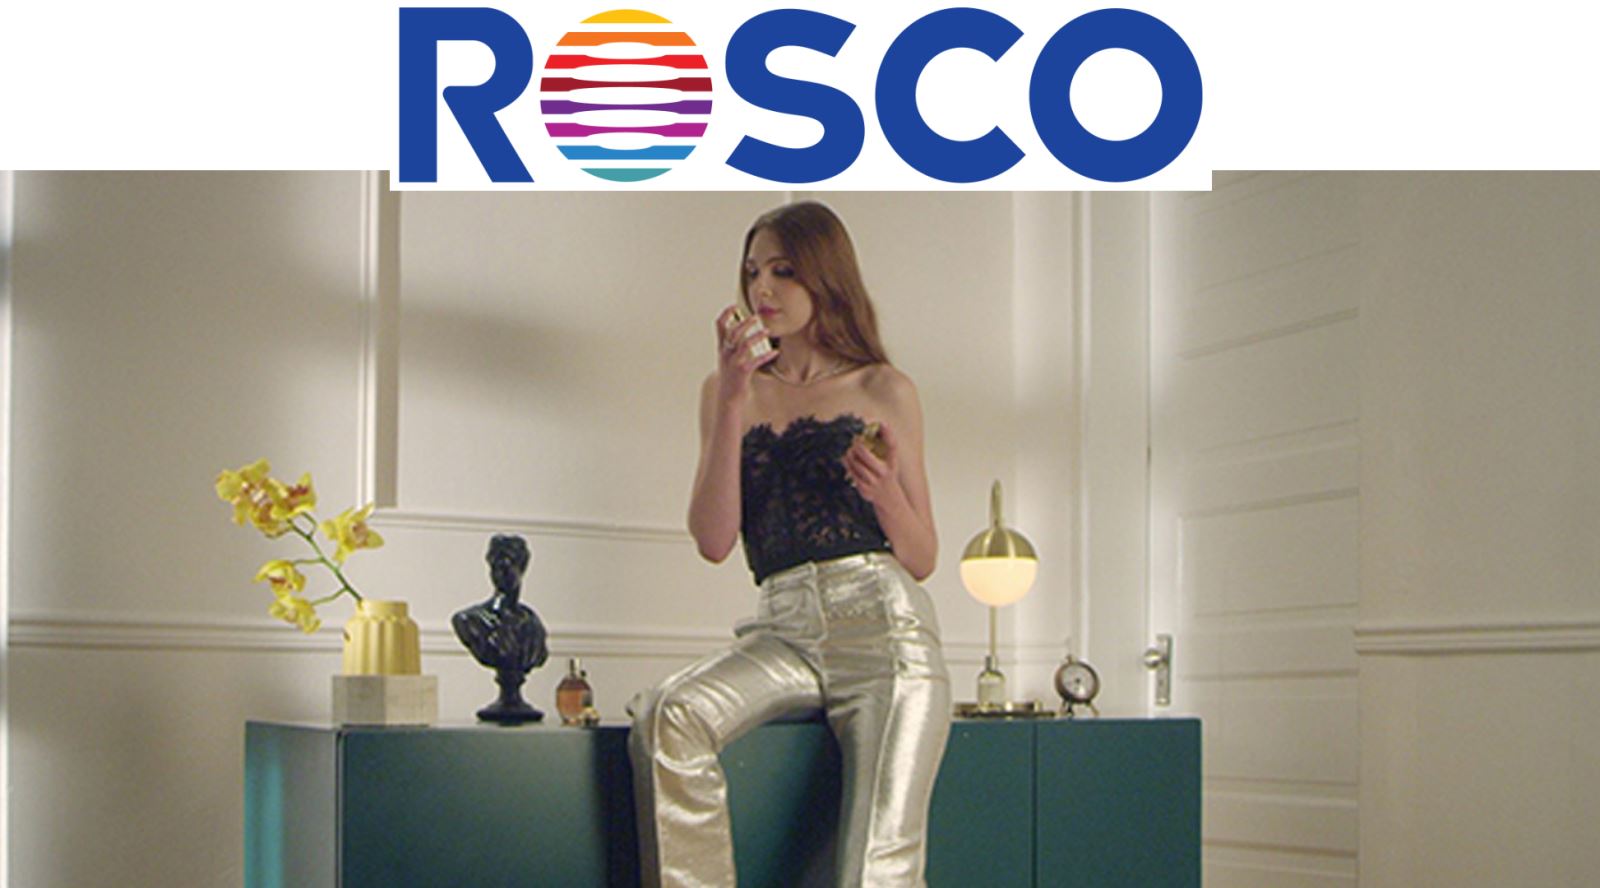 Rosco - DMG lights making commercials